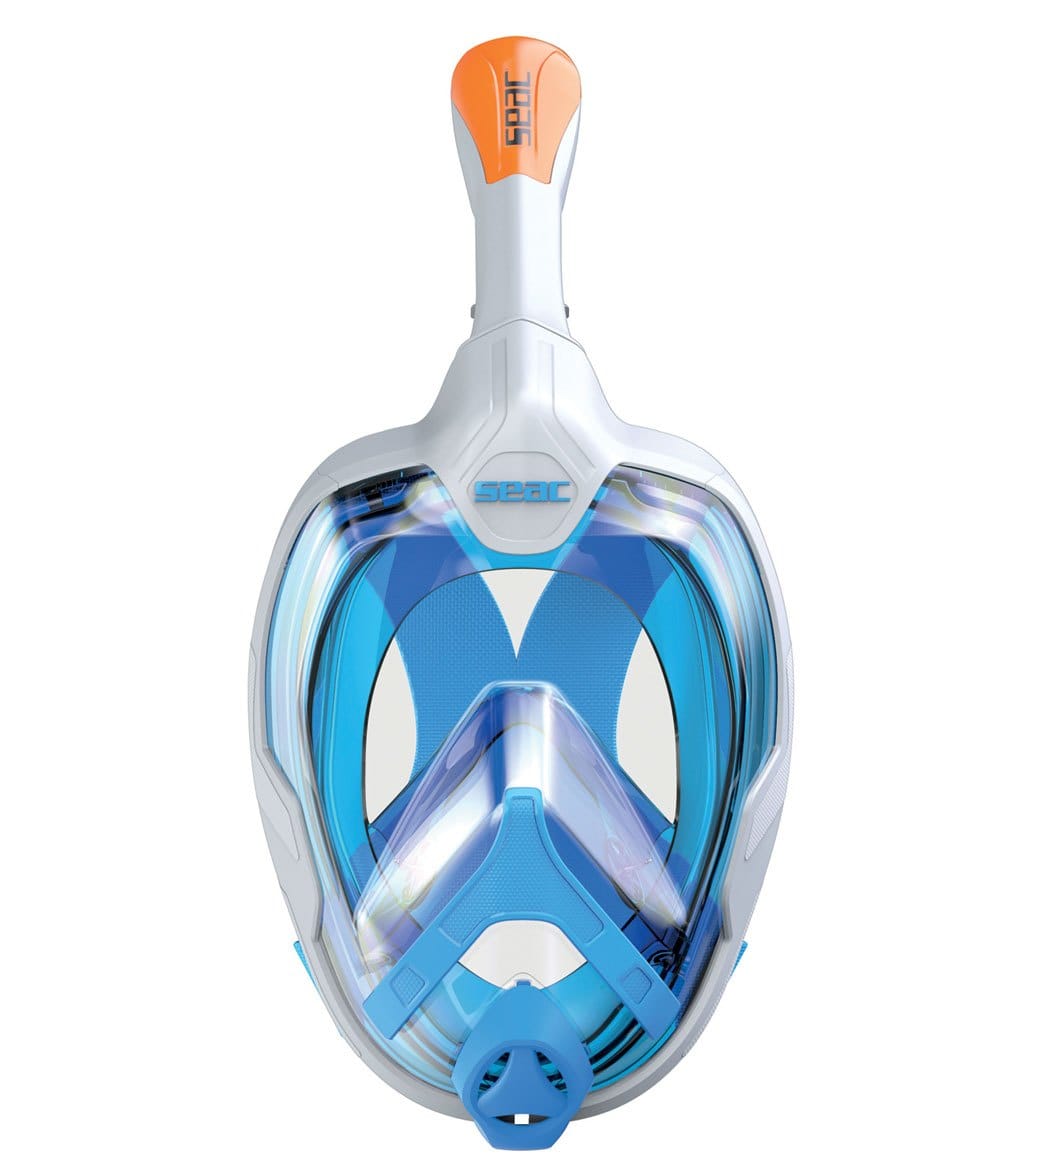 Seac Usa Magica Full Face Snorkeling Mask - White/Orange Small/Medium - Swimoutlet.com